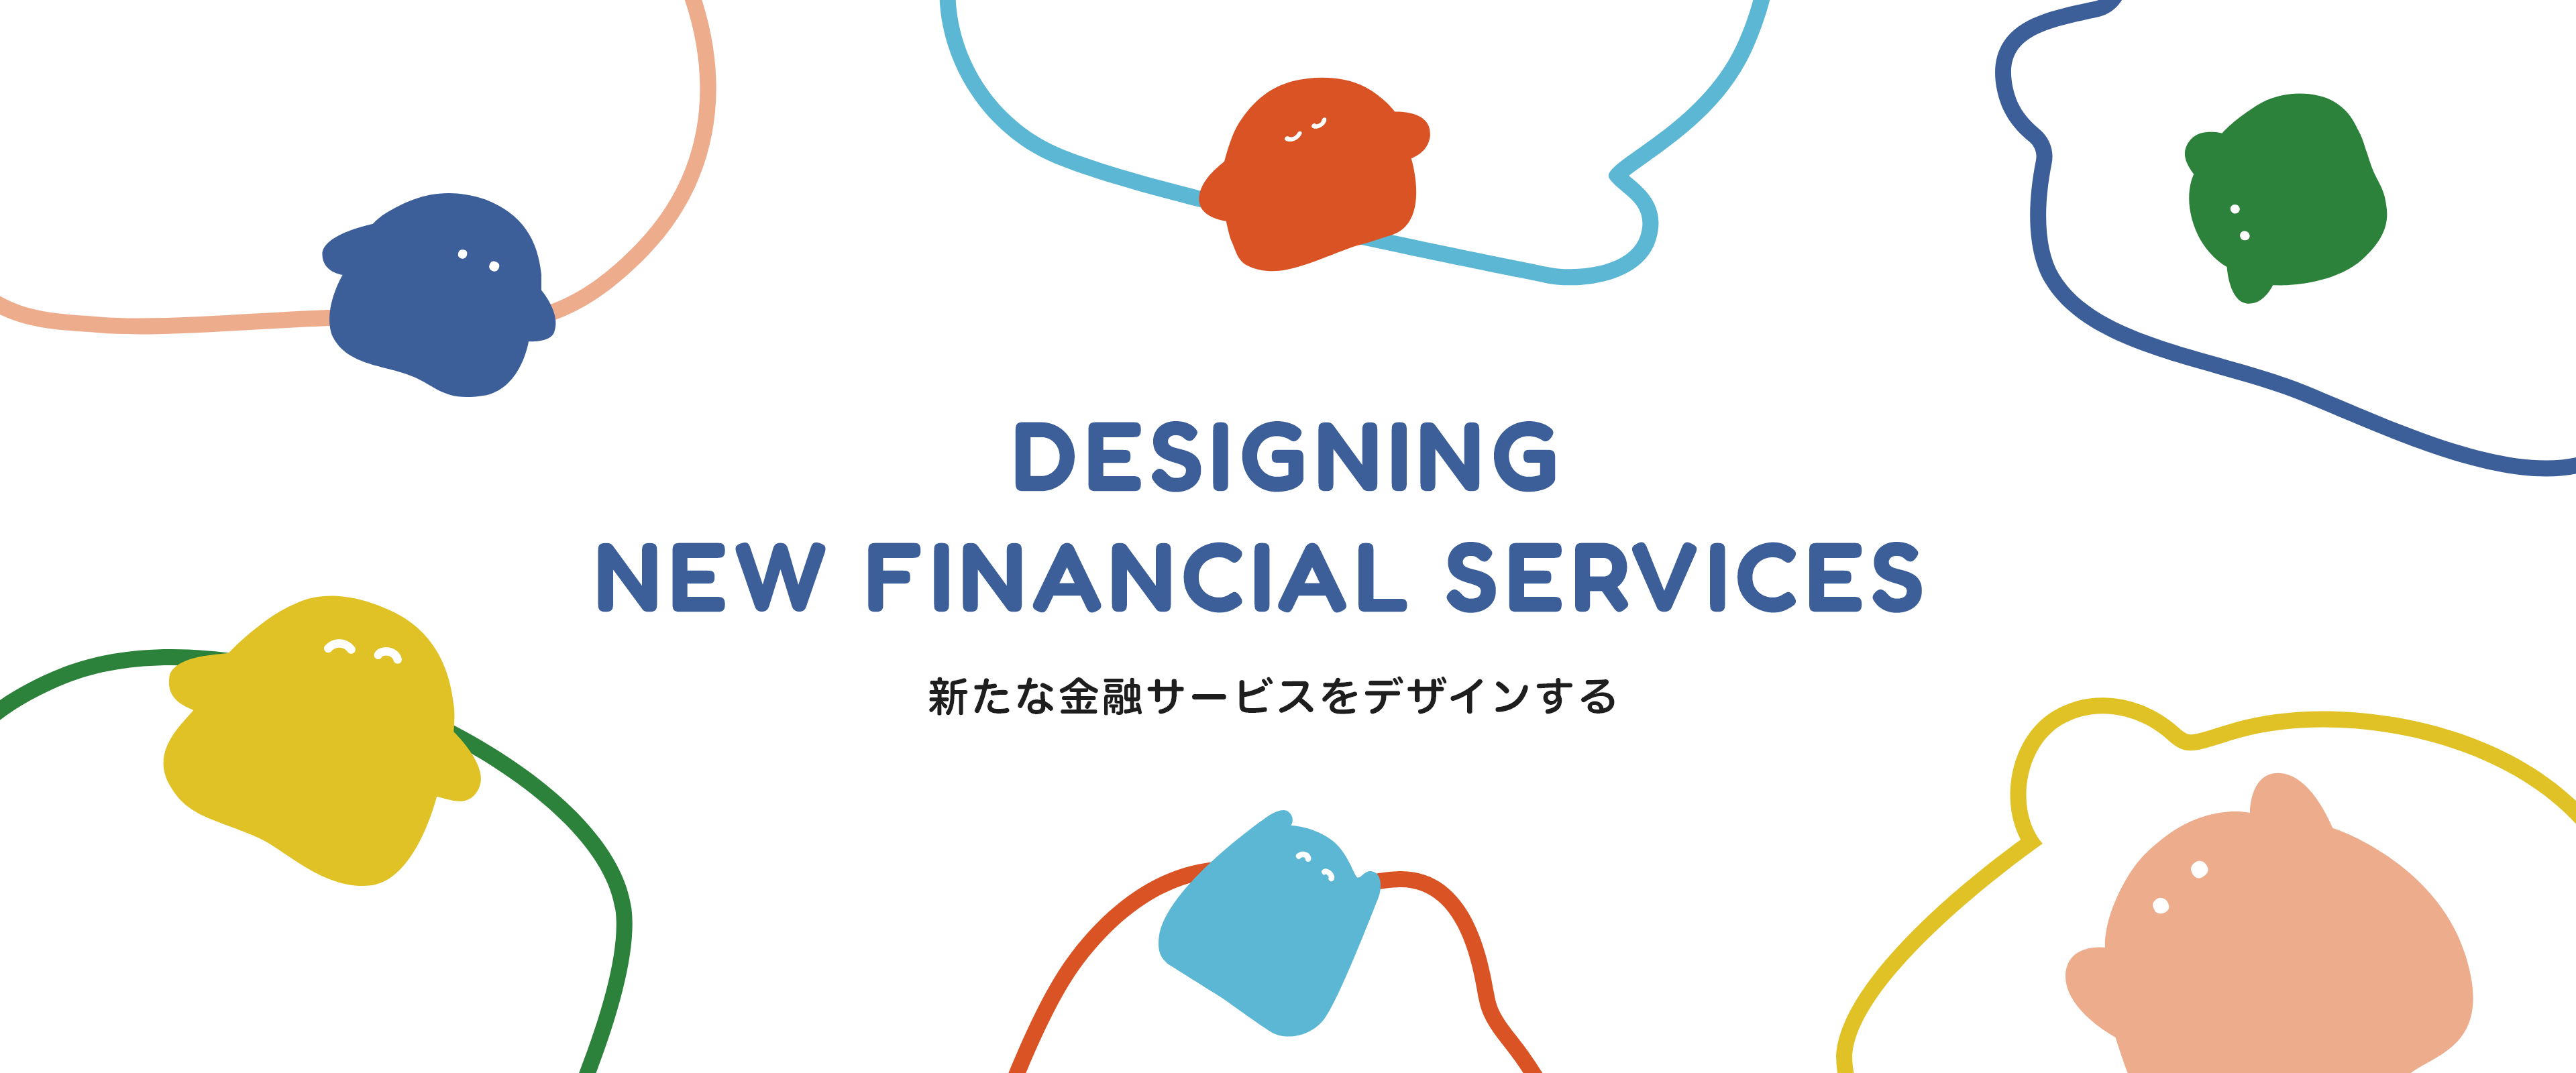 DESIGNING NEW FINANCIAL SERVICES, 新たな金融サービスをデザインする